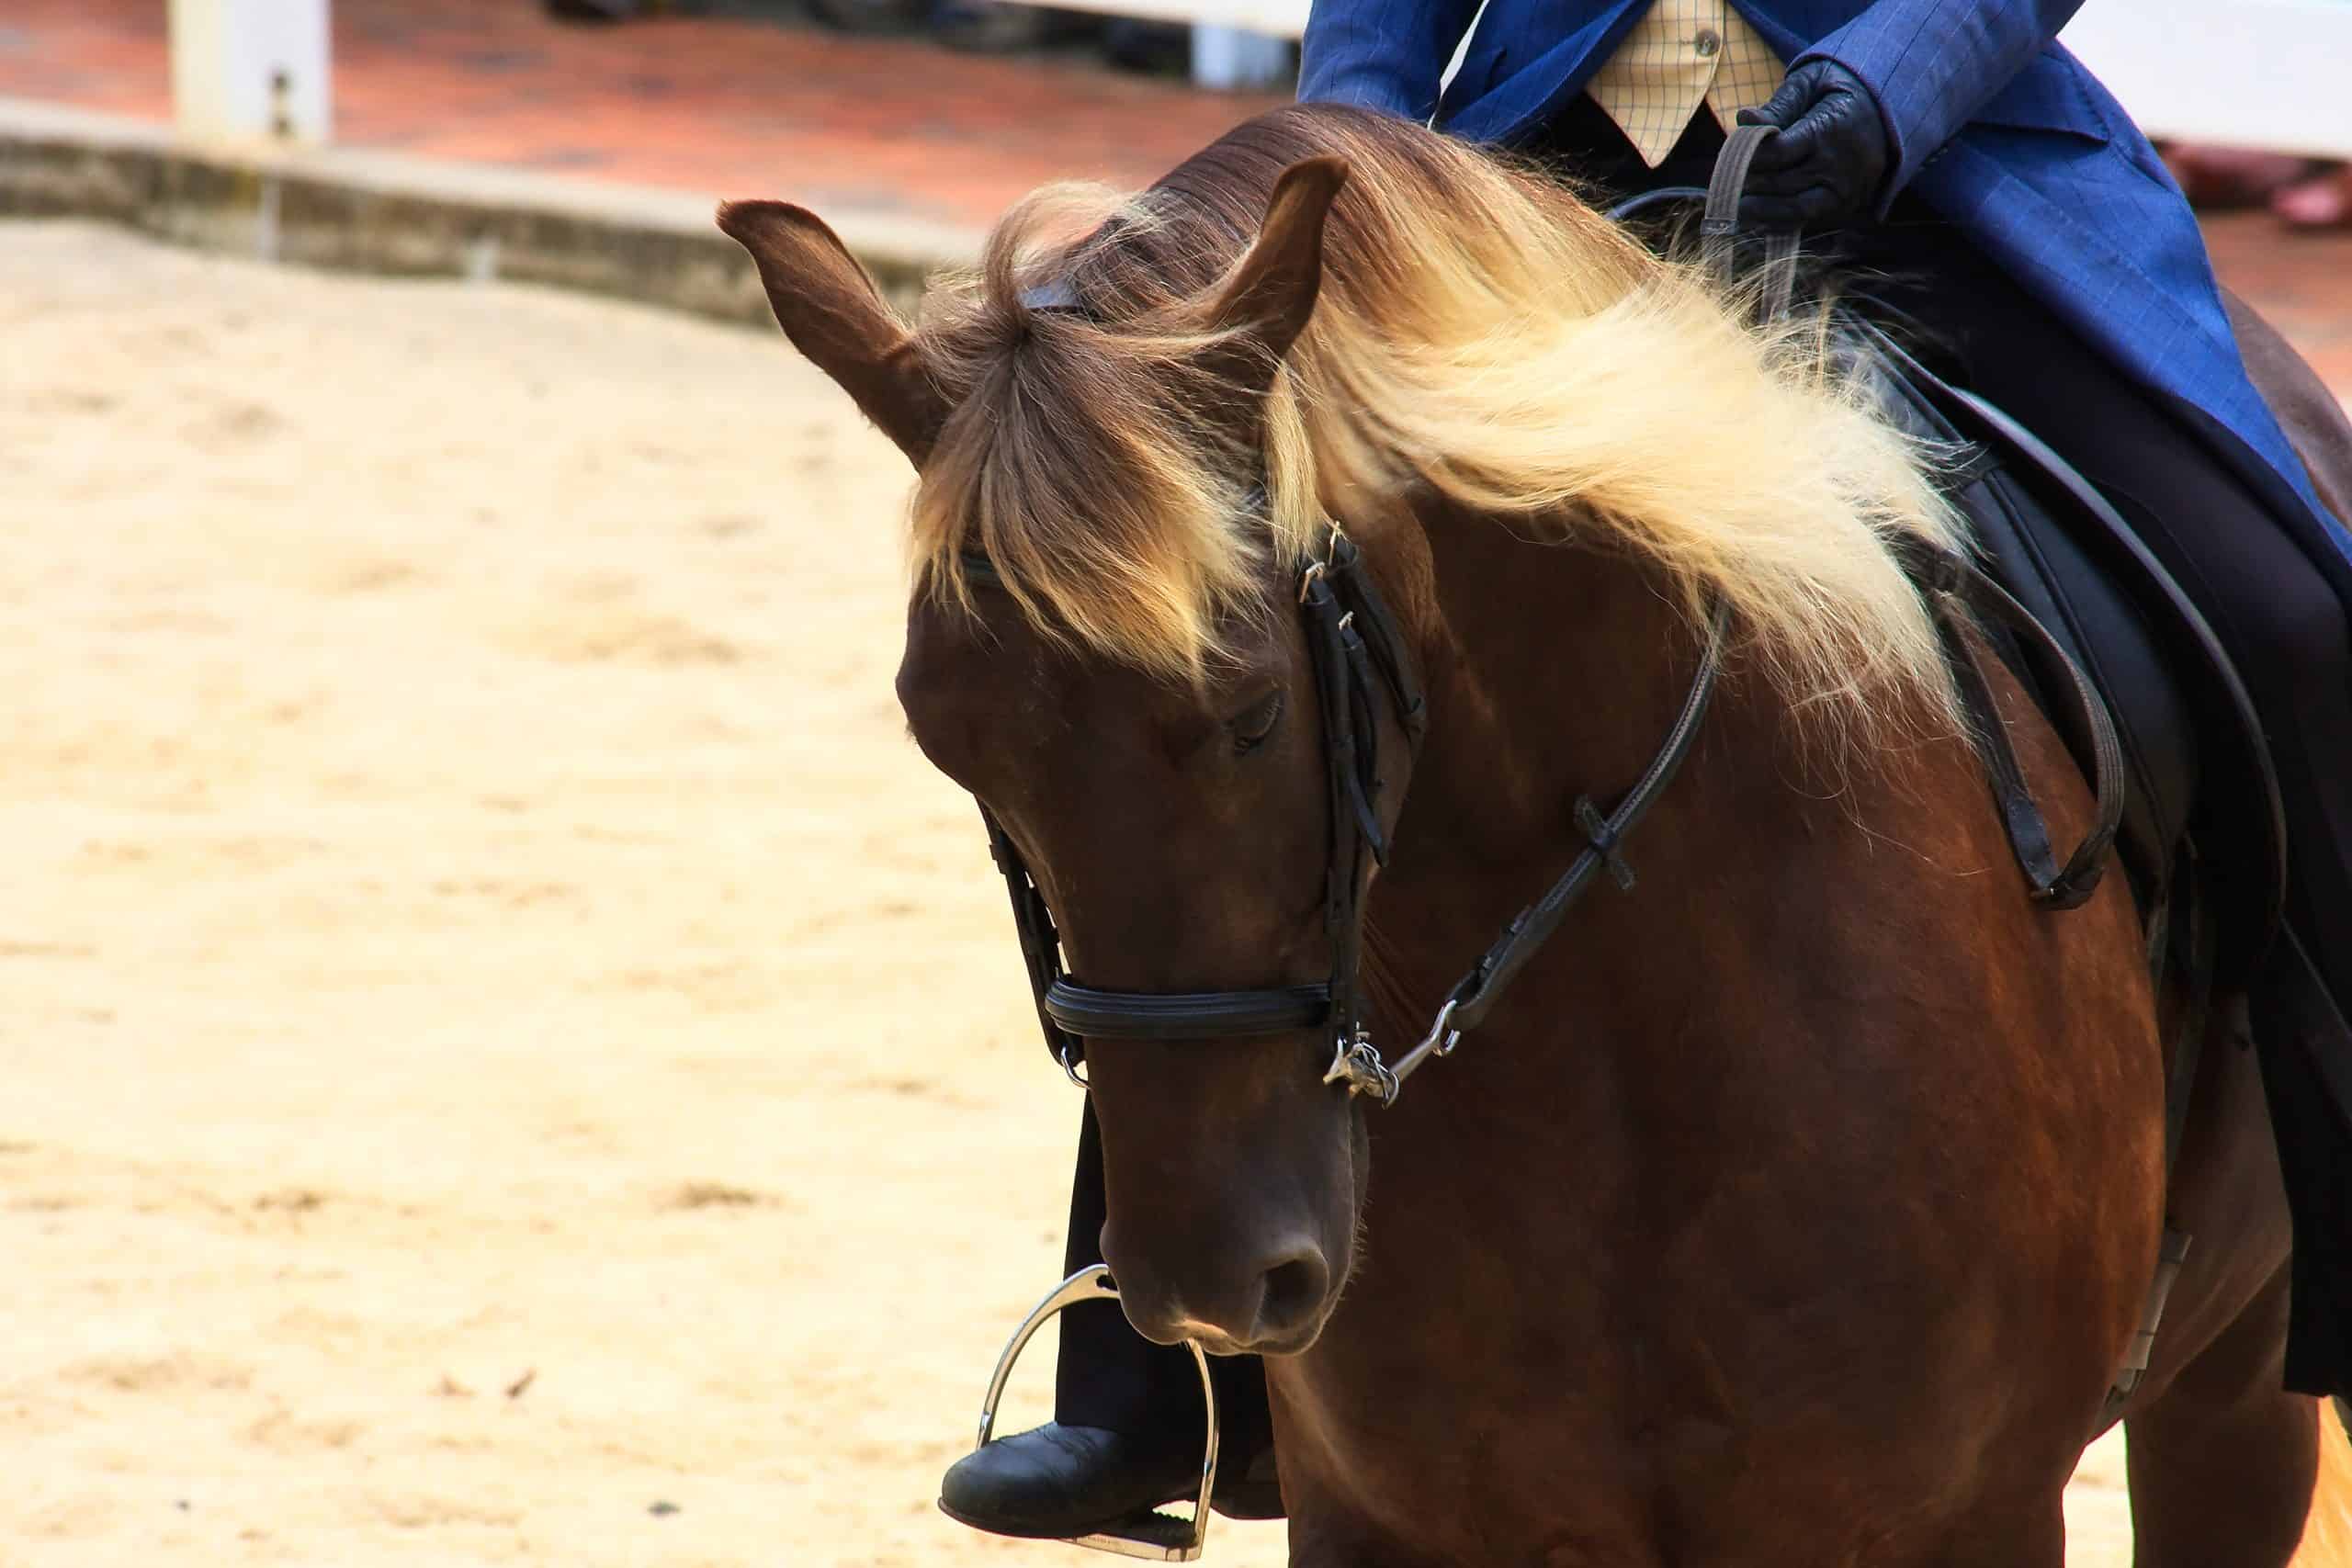 Rocky Mountain Horse breed being ridden